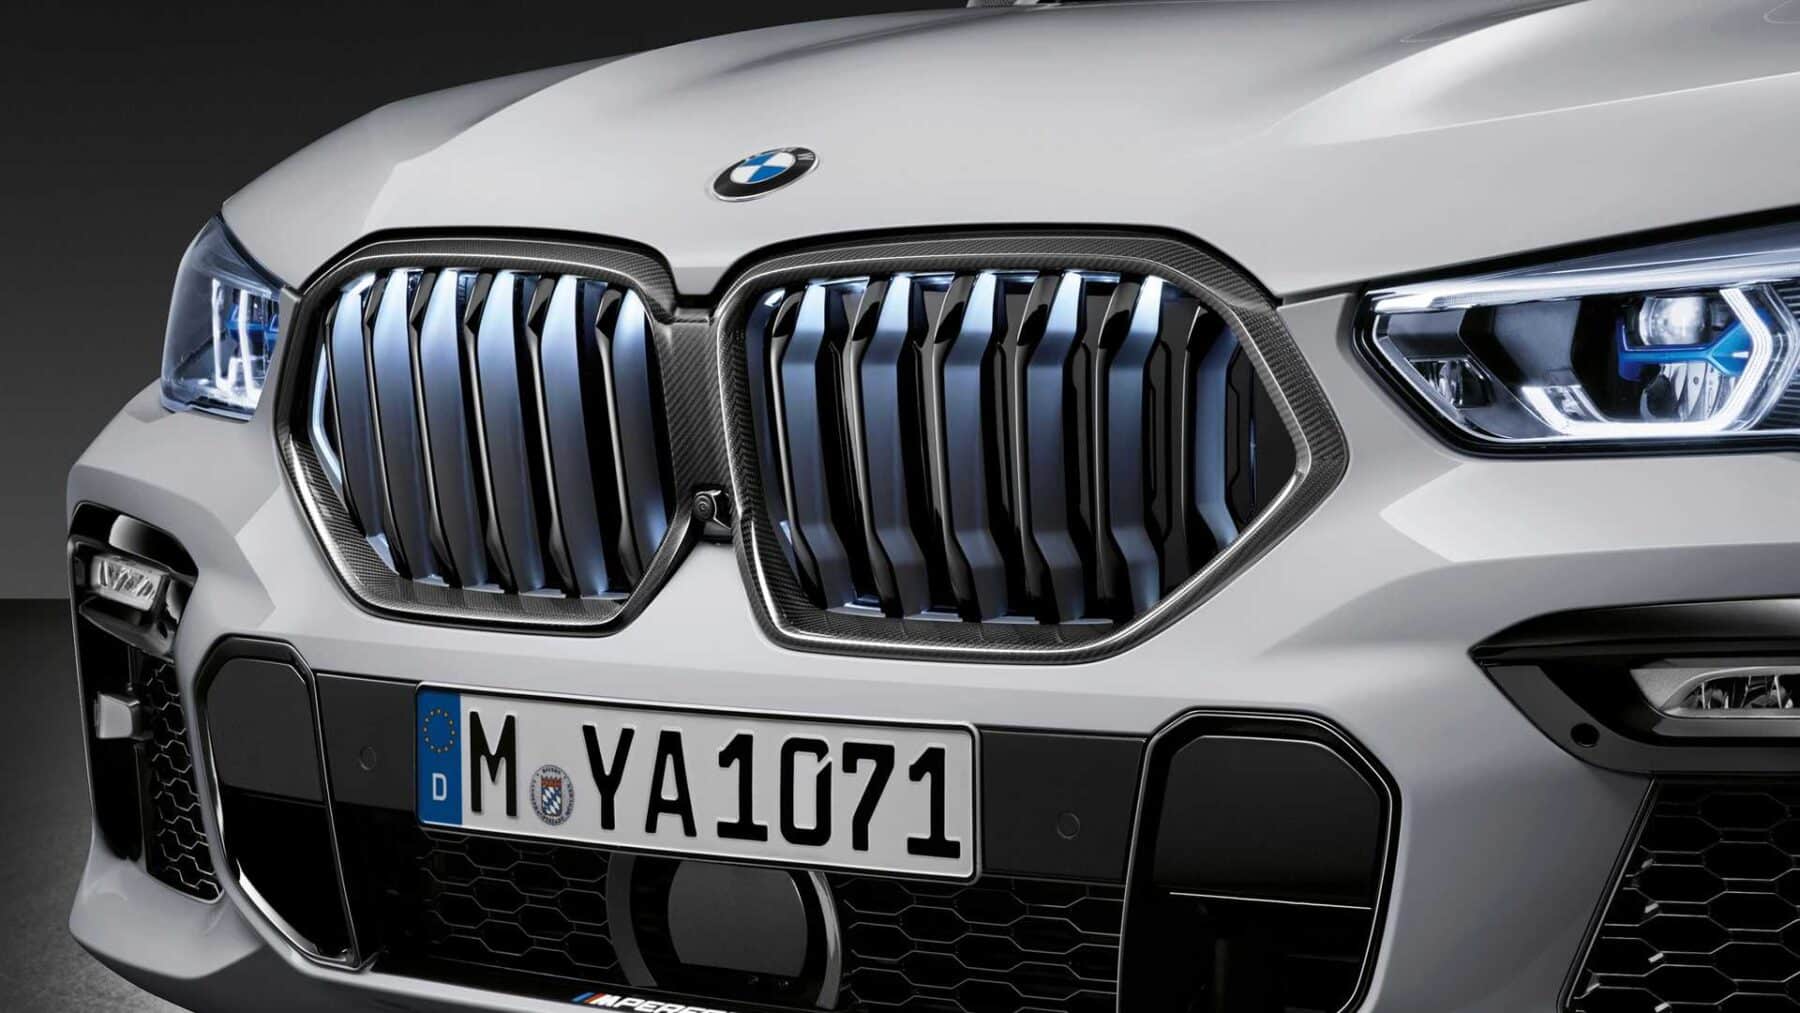 https://www.autonocion.com/wp-content/uploads/2019/10/Accesorios-M-Performance-BMW-X6-X5-M-X6-M-y-X7-2019-7.jpg